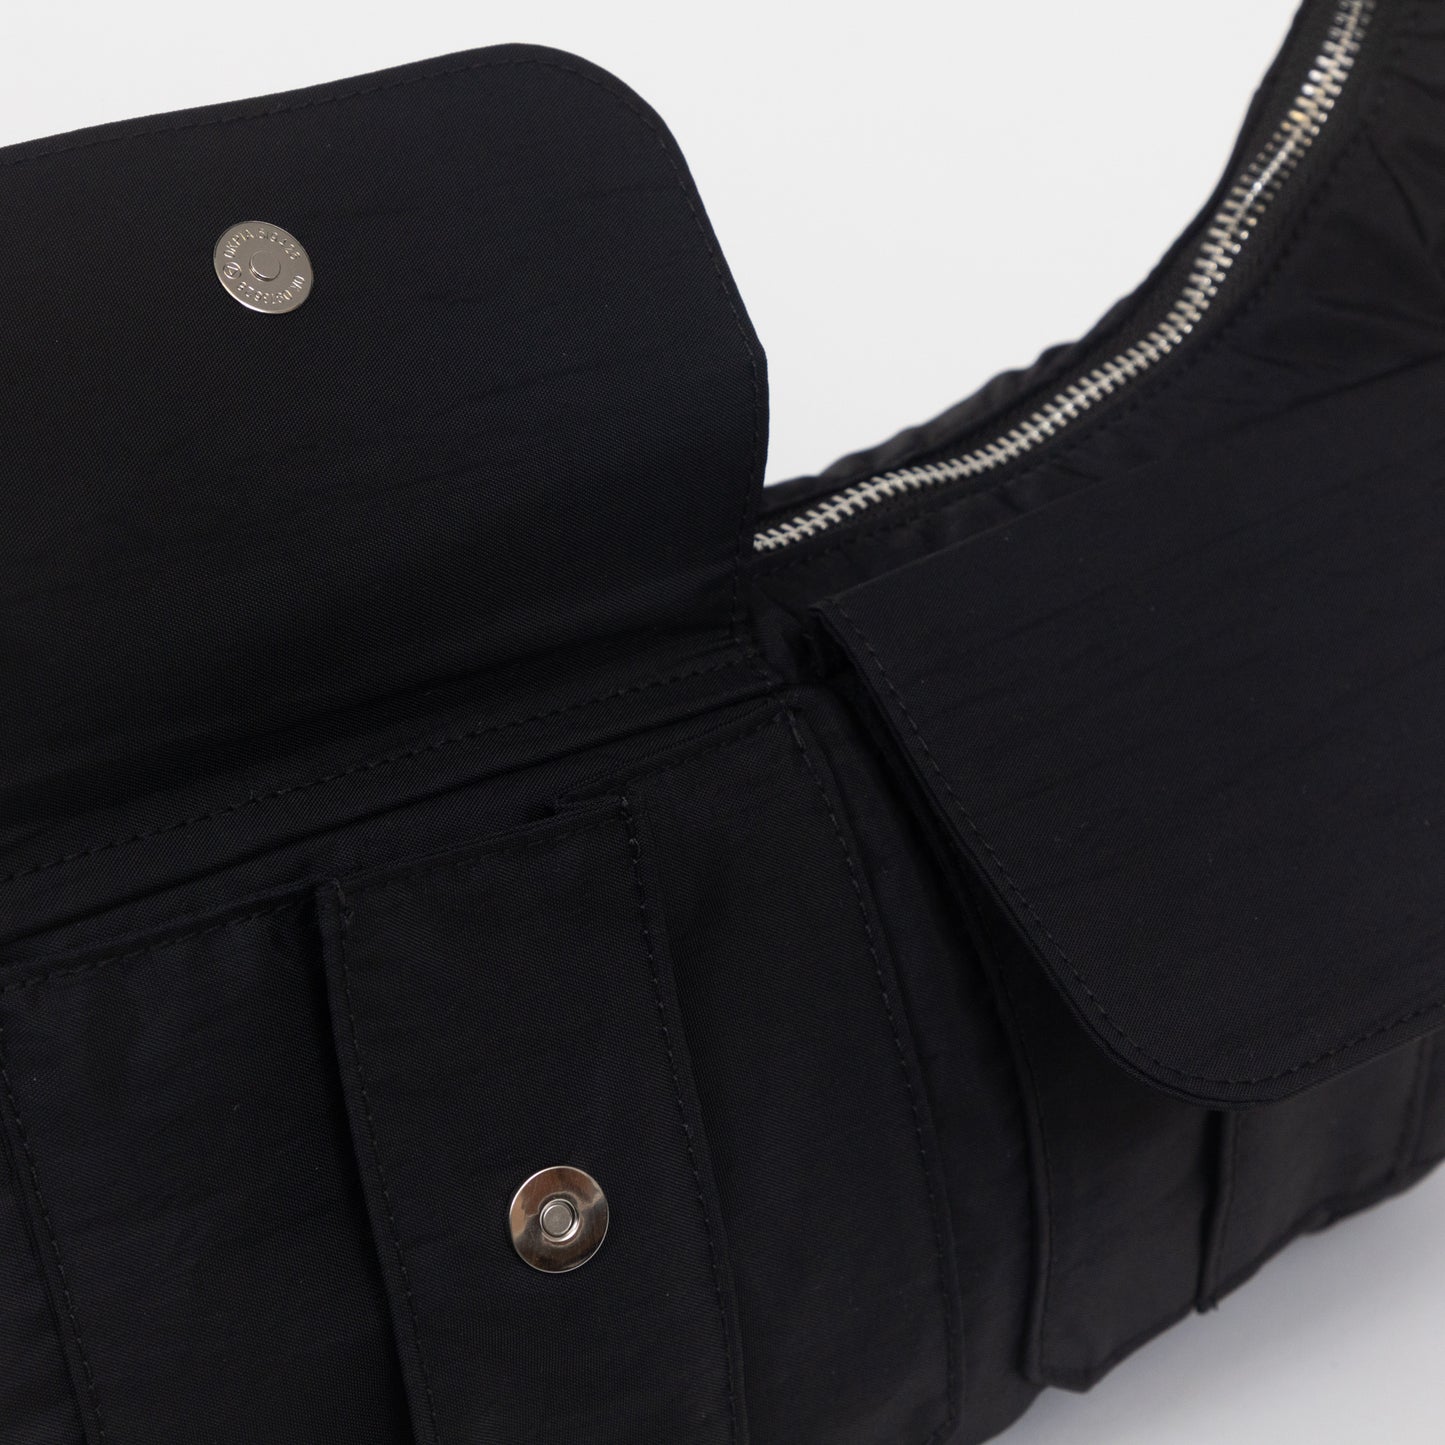 Women's MISFIT SHAPES Aquarius Soulder Bag in BLACK